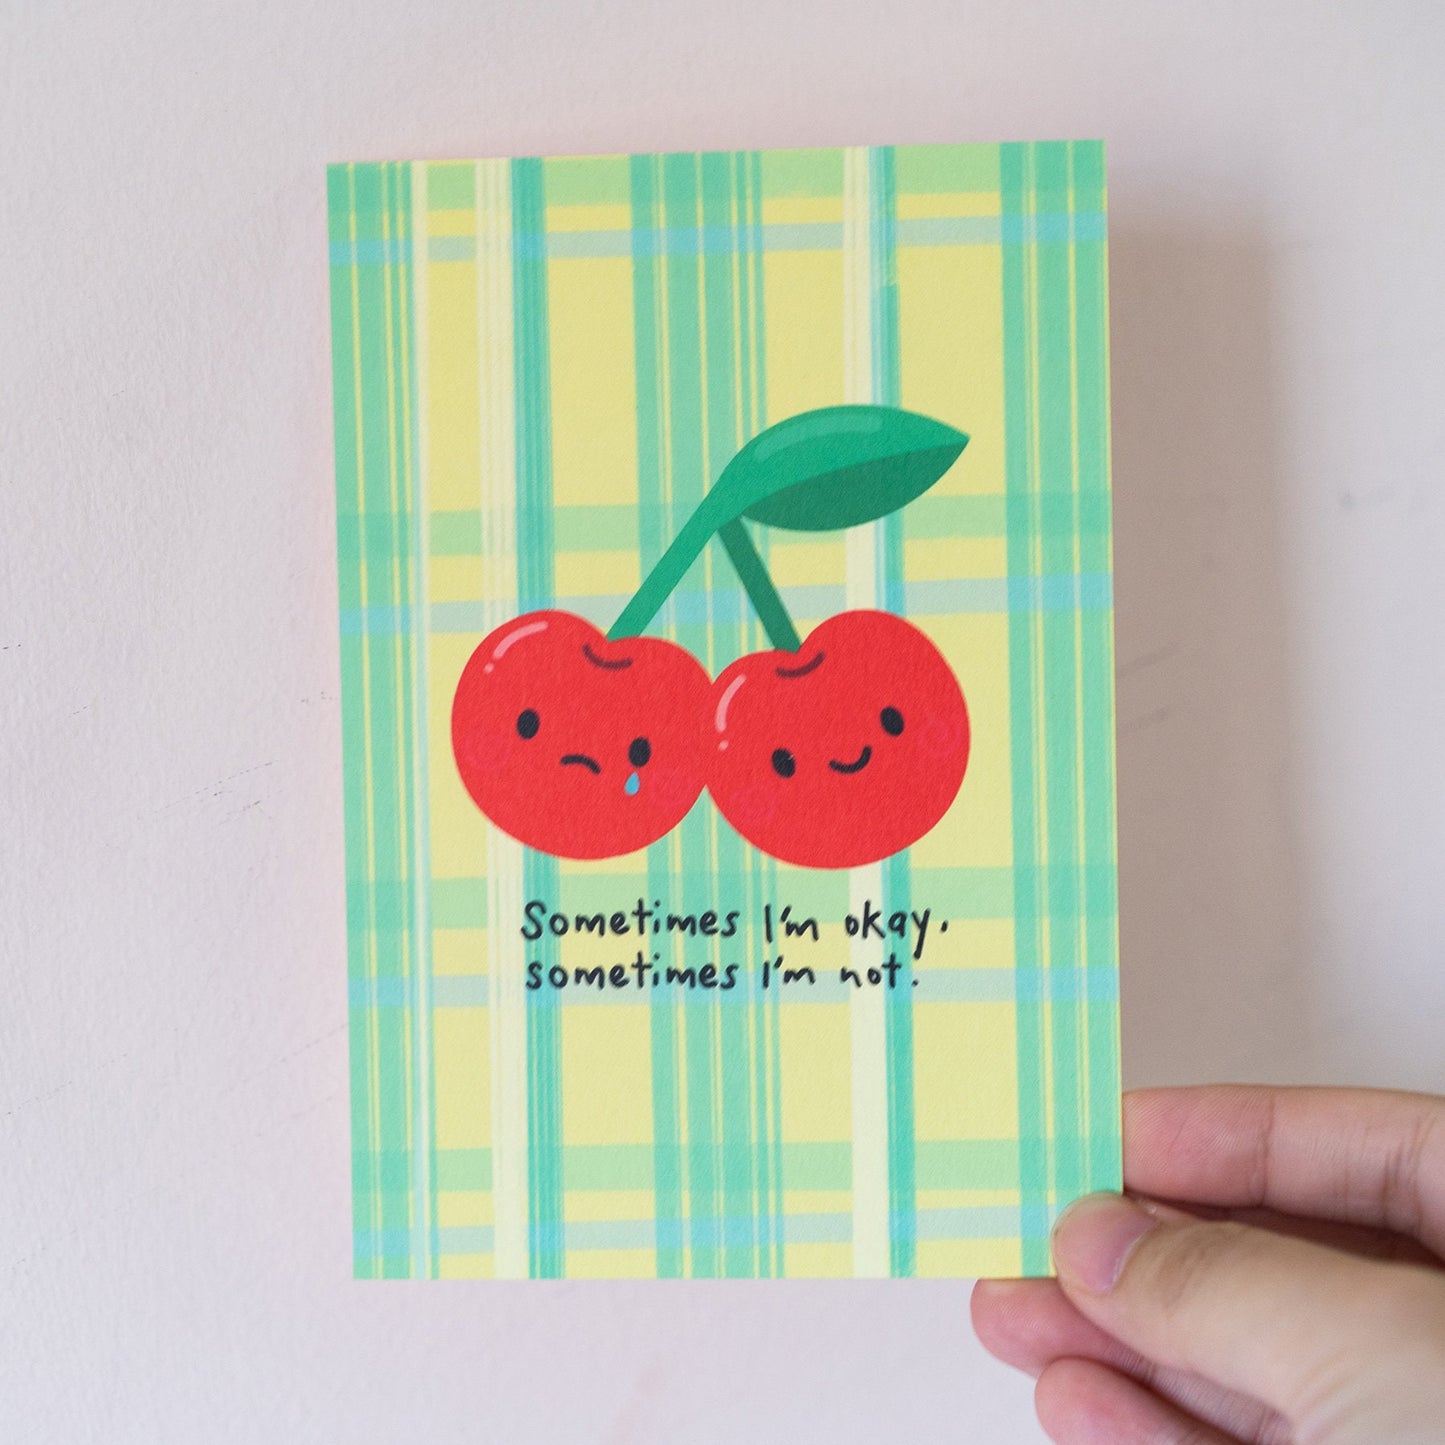 Sometimes I'm okay, sometimes I'm not - Cherry Postcard / Print